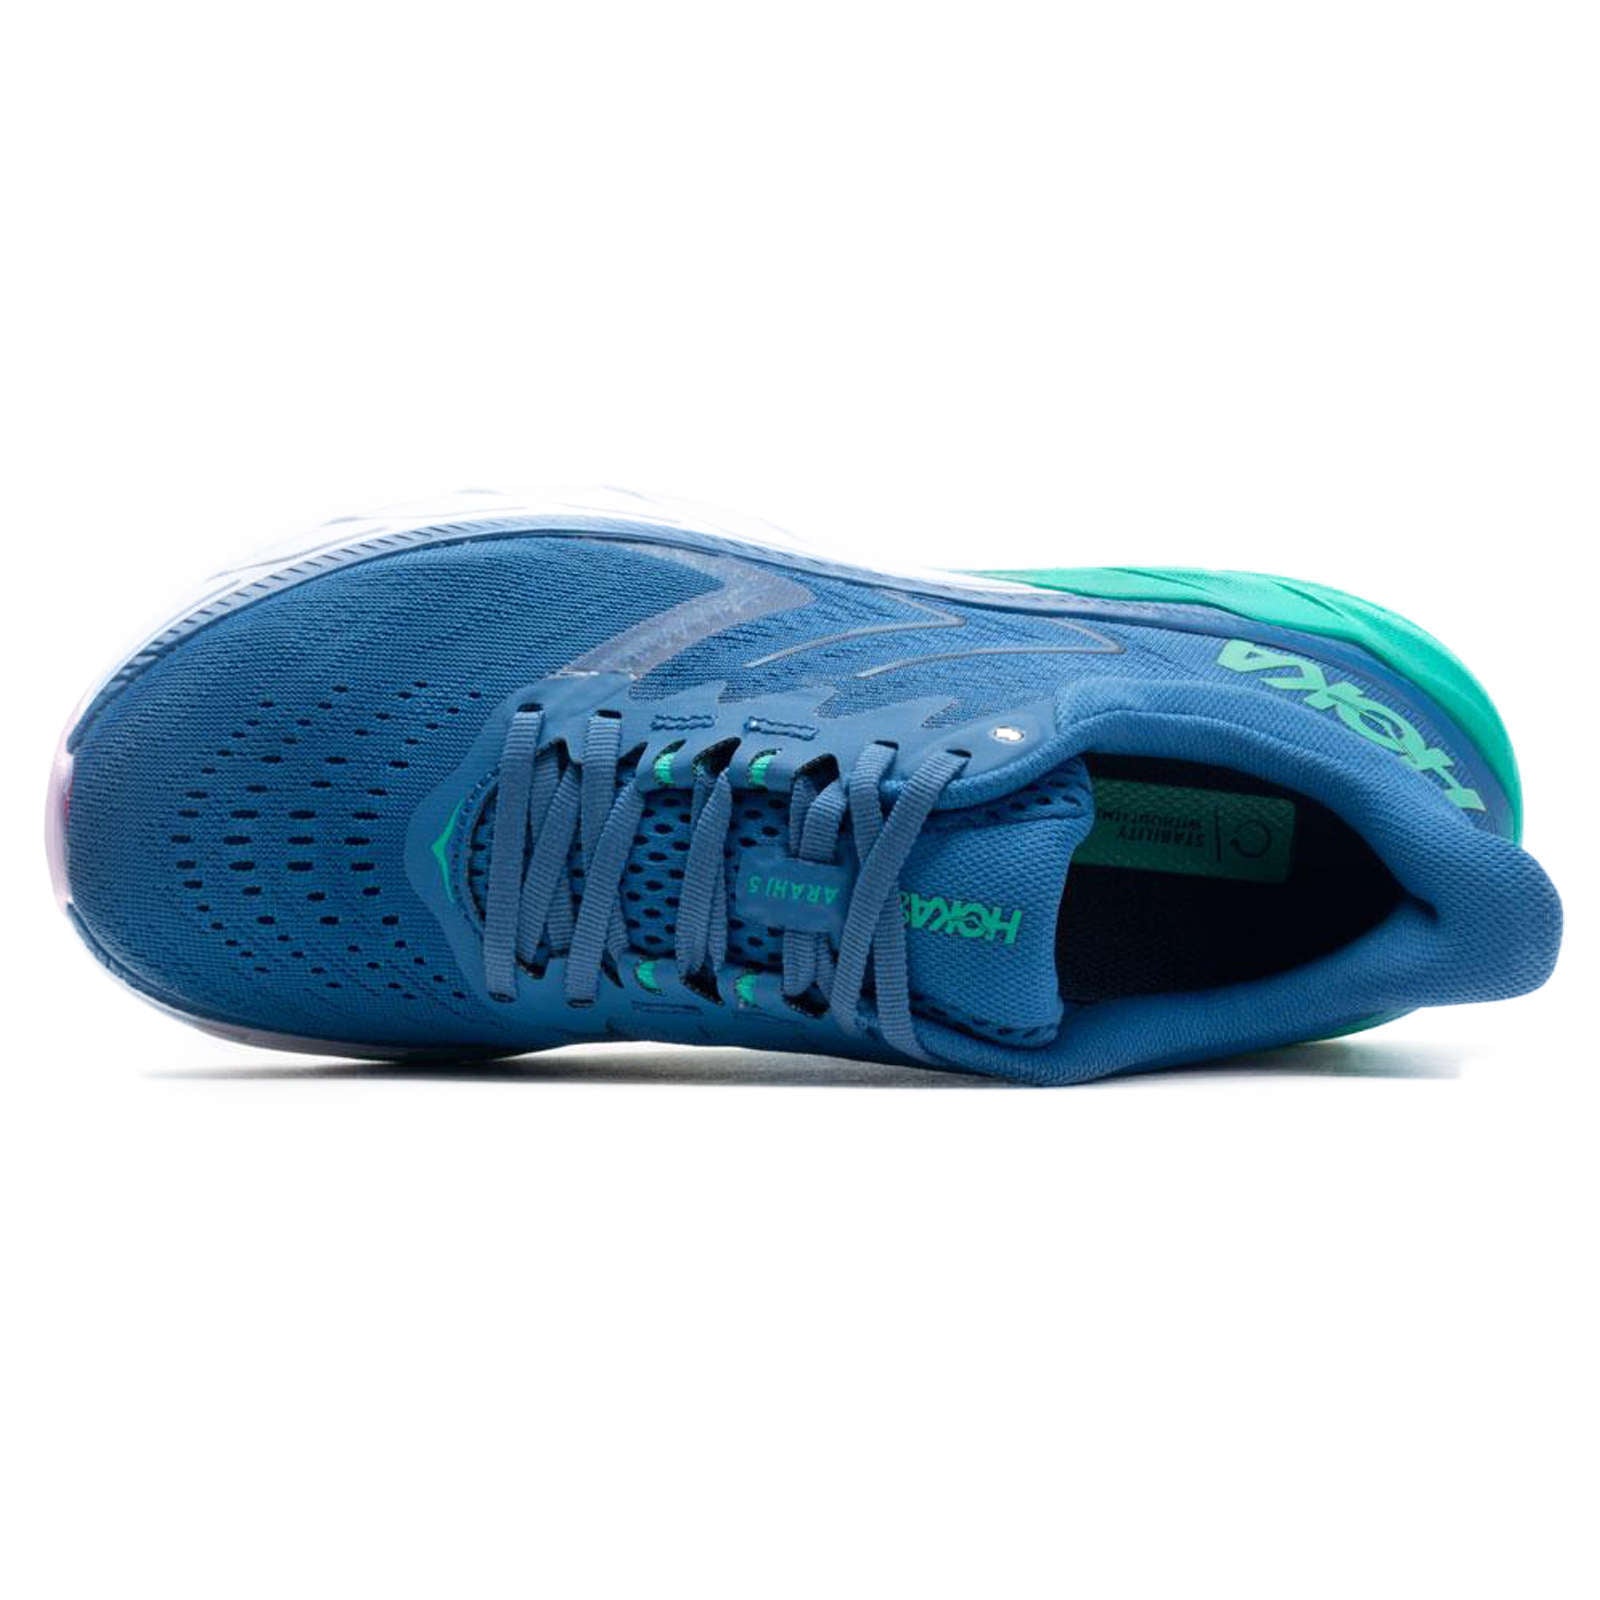 Hoka One One Arahi 5 Synthetic Textile Women's Low-Top Road Running Sneakers#color_vallarta blue atlantis